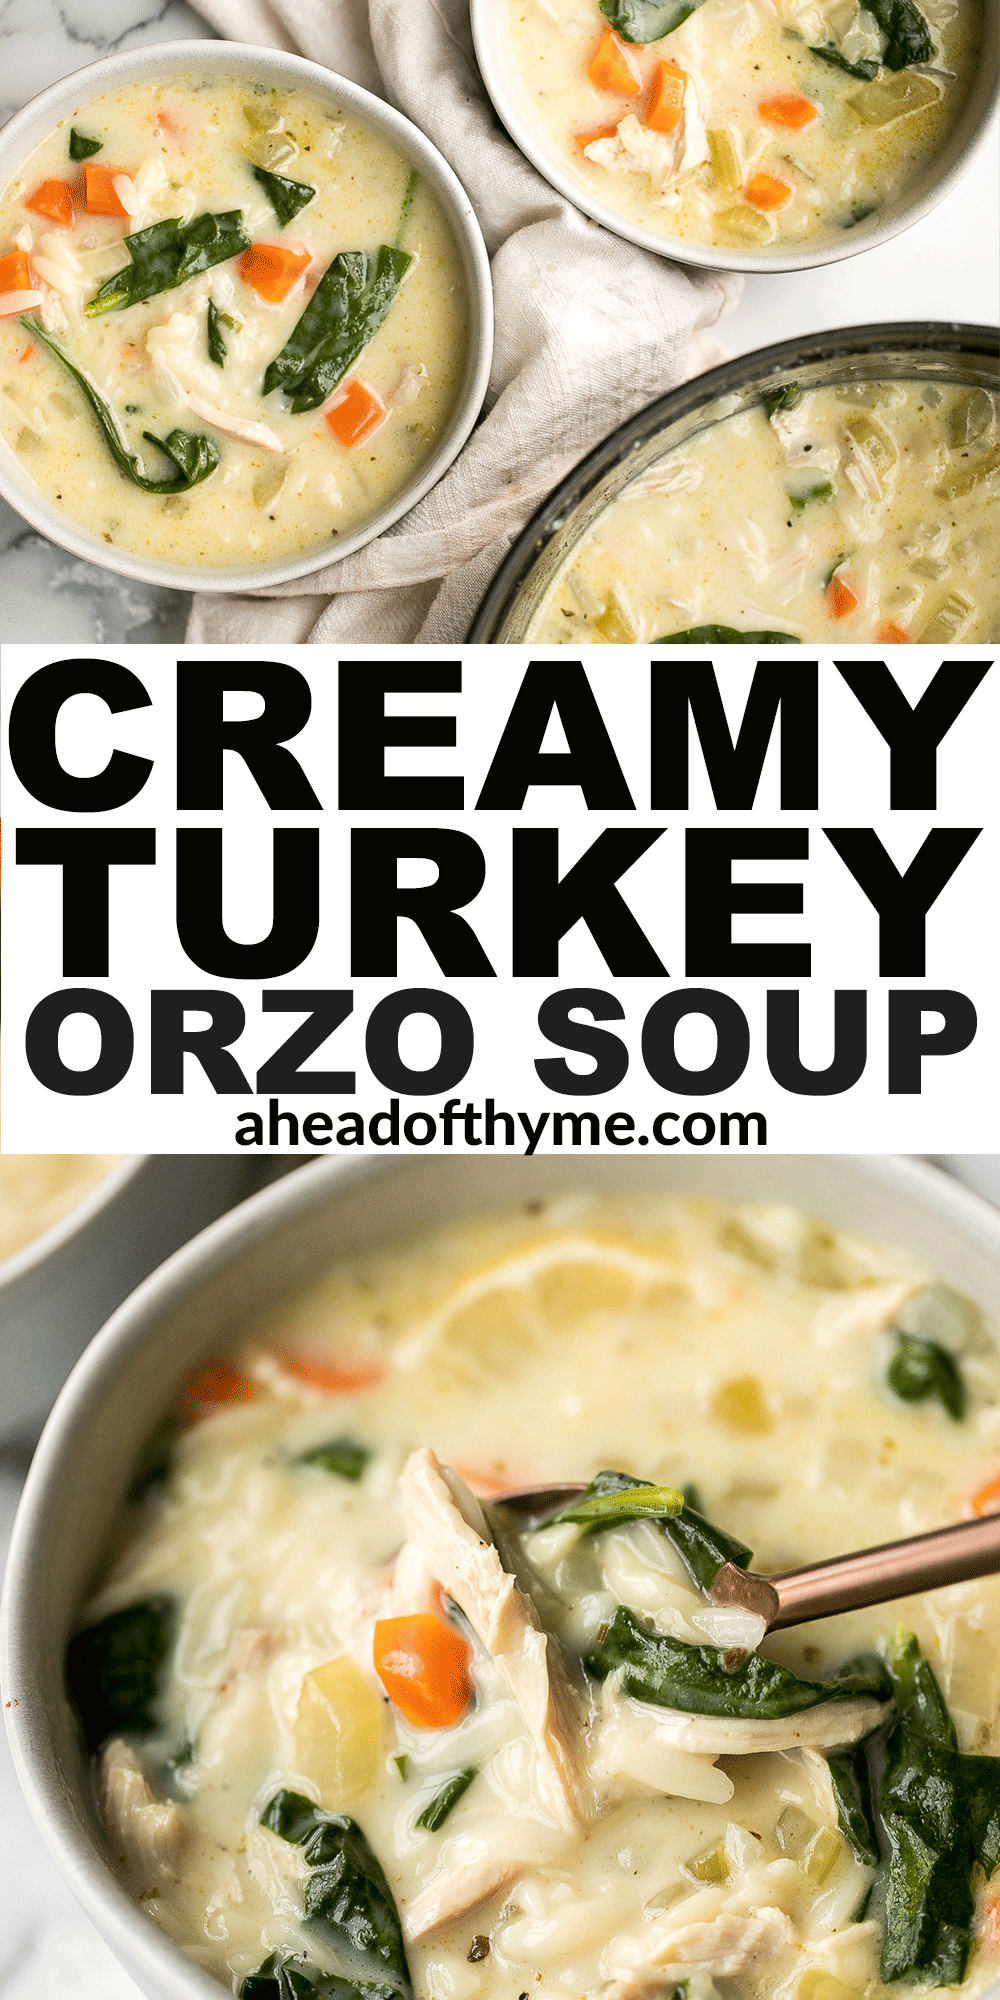 Creamy Turkey Orzo Soup